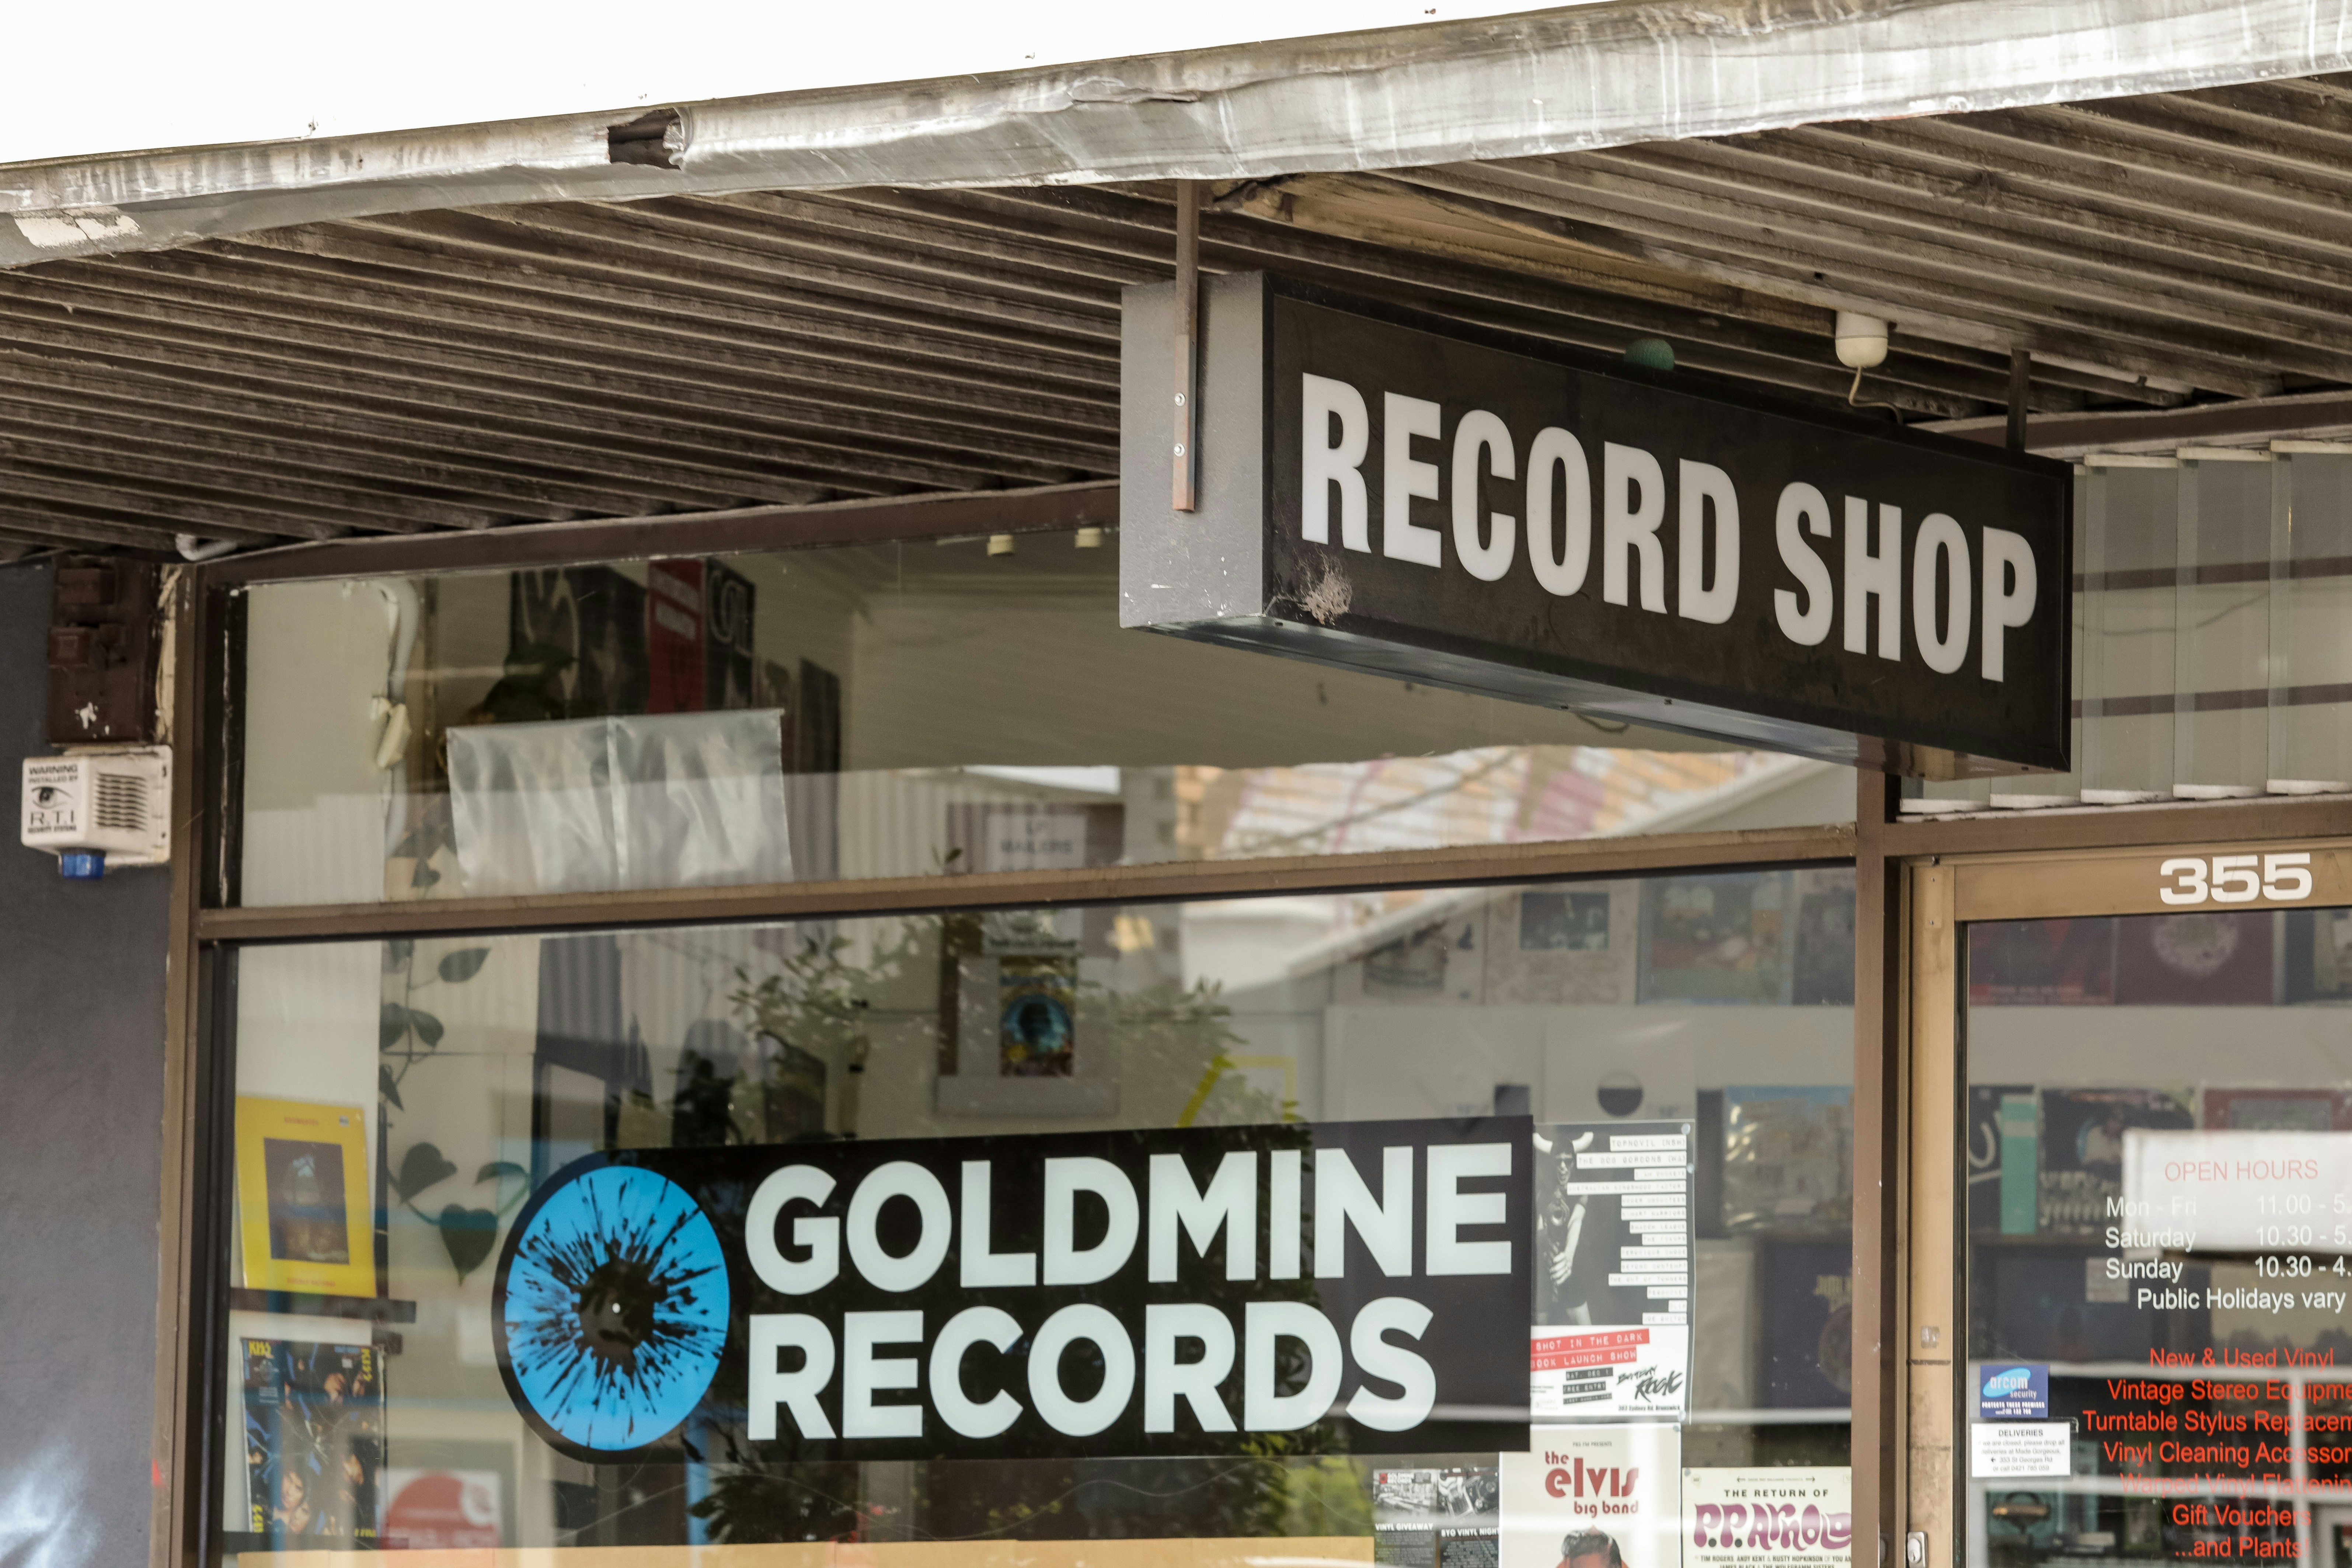 Goldmine Records